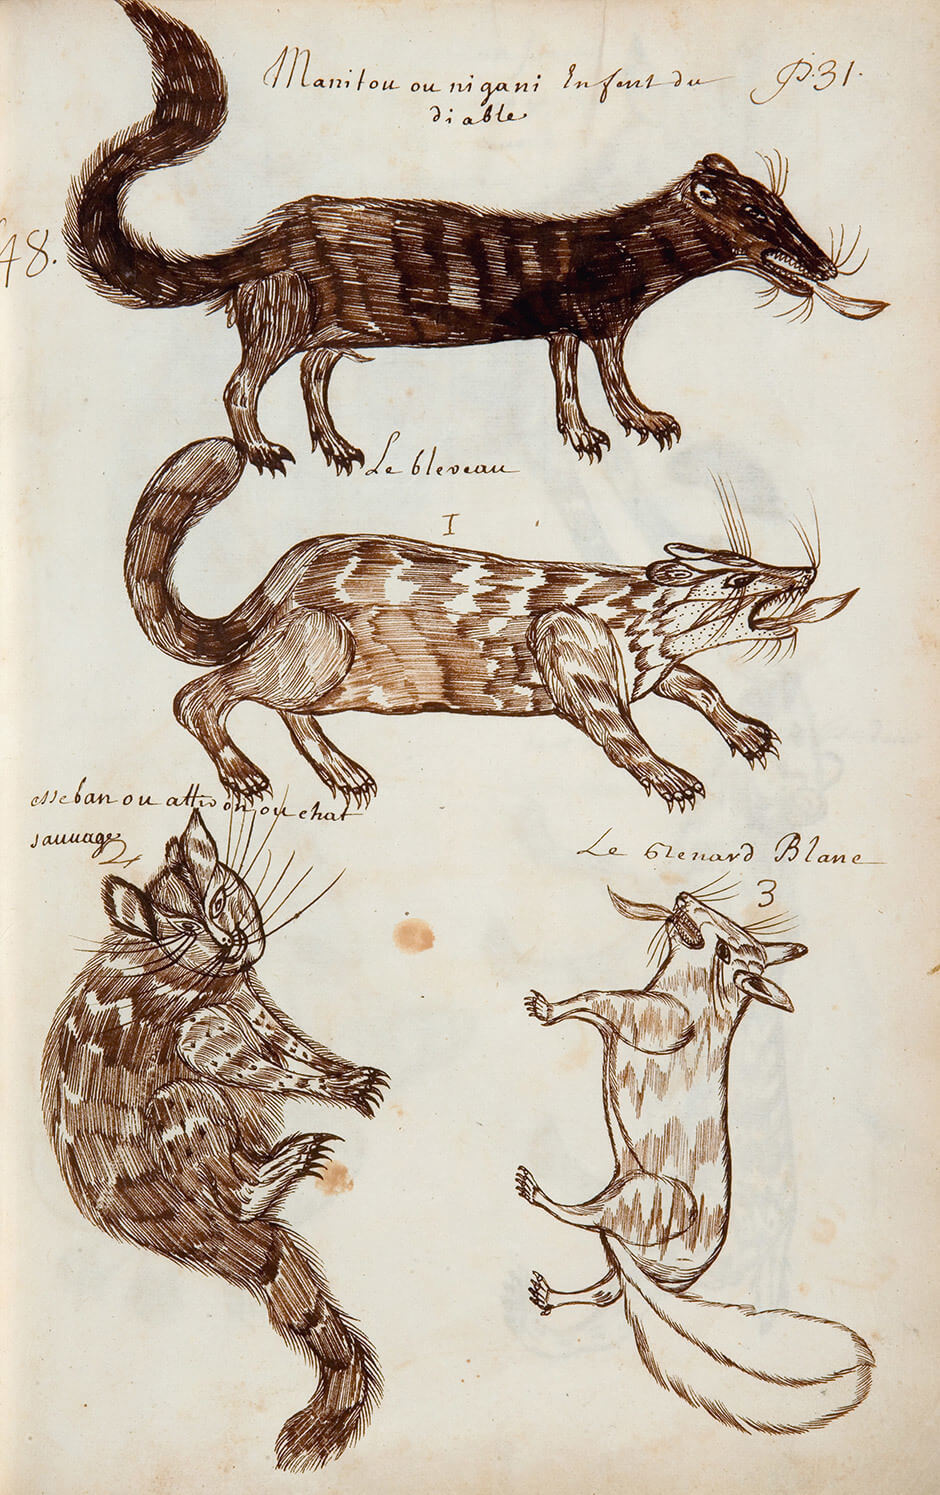 Art Canada Institute, Louis Nicolas, Manitou or Nigani, Devil’s Child (Manitou ou nigani Enfant du diable), Codex Canadensis